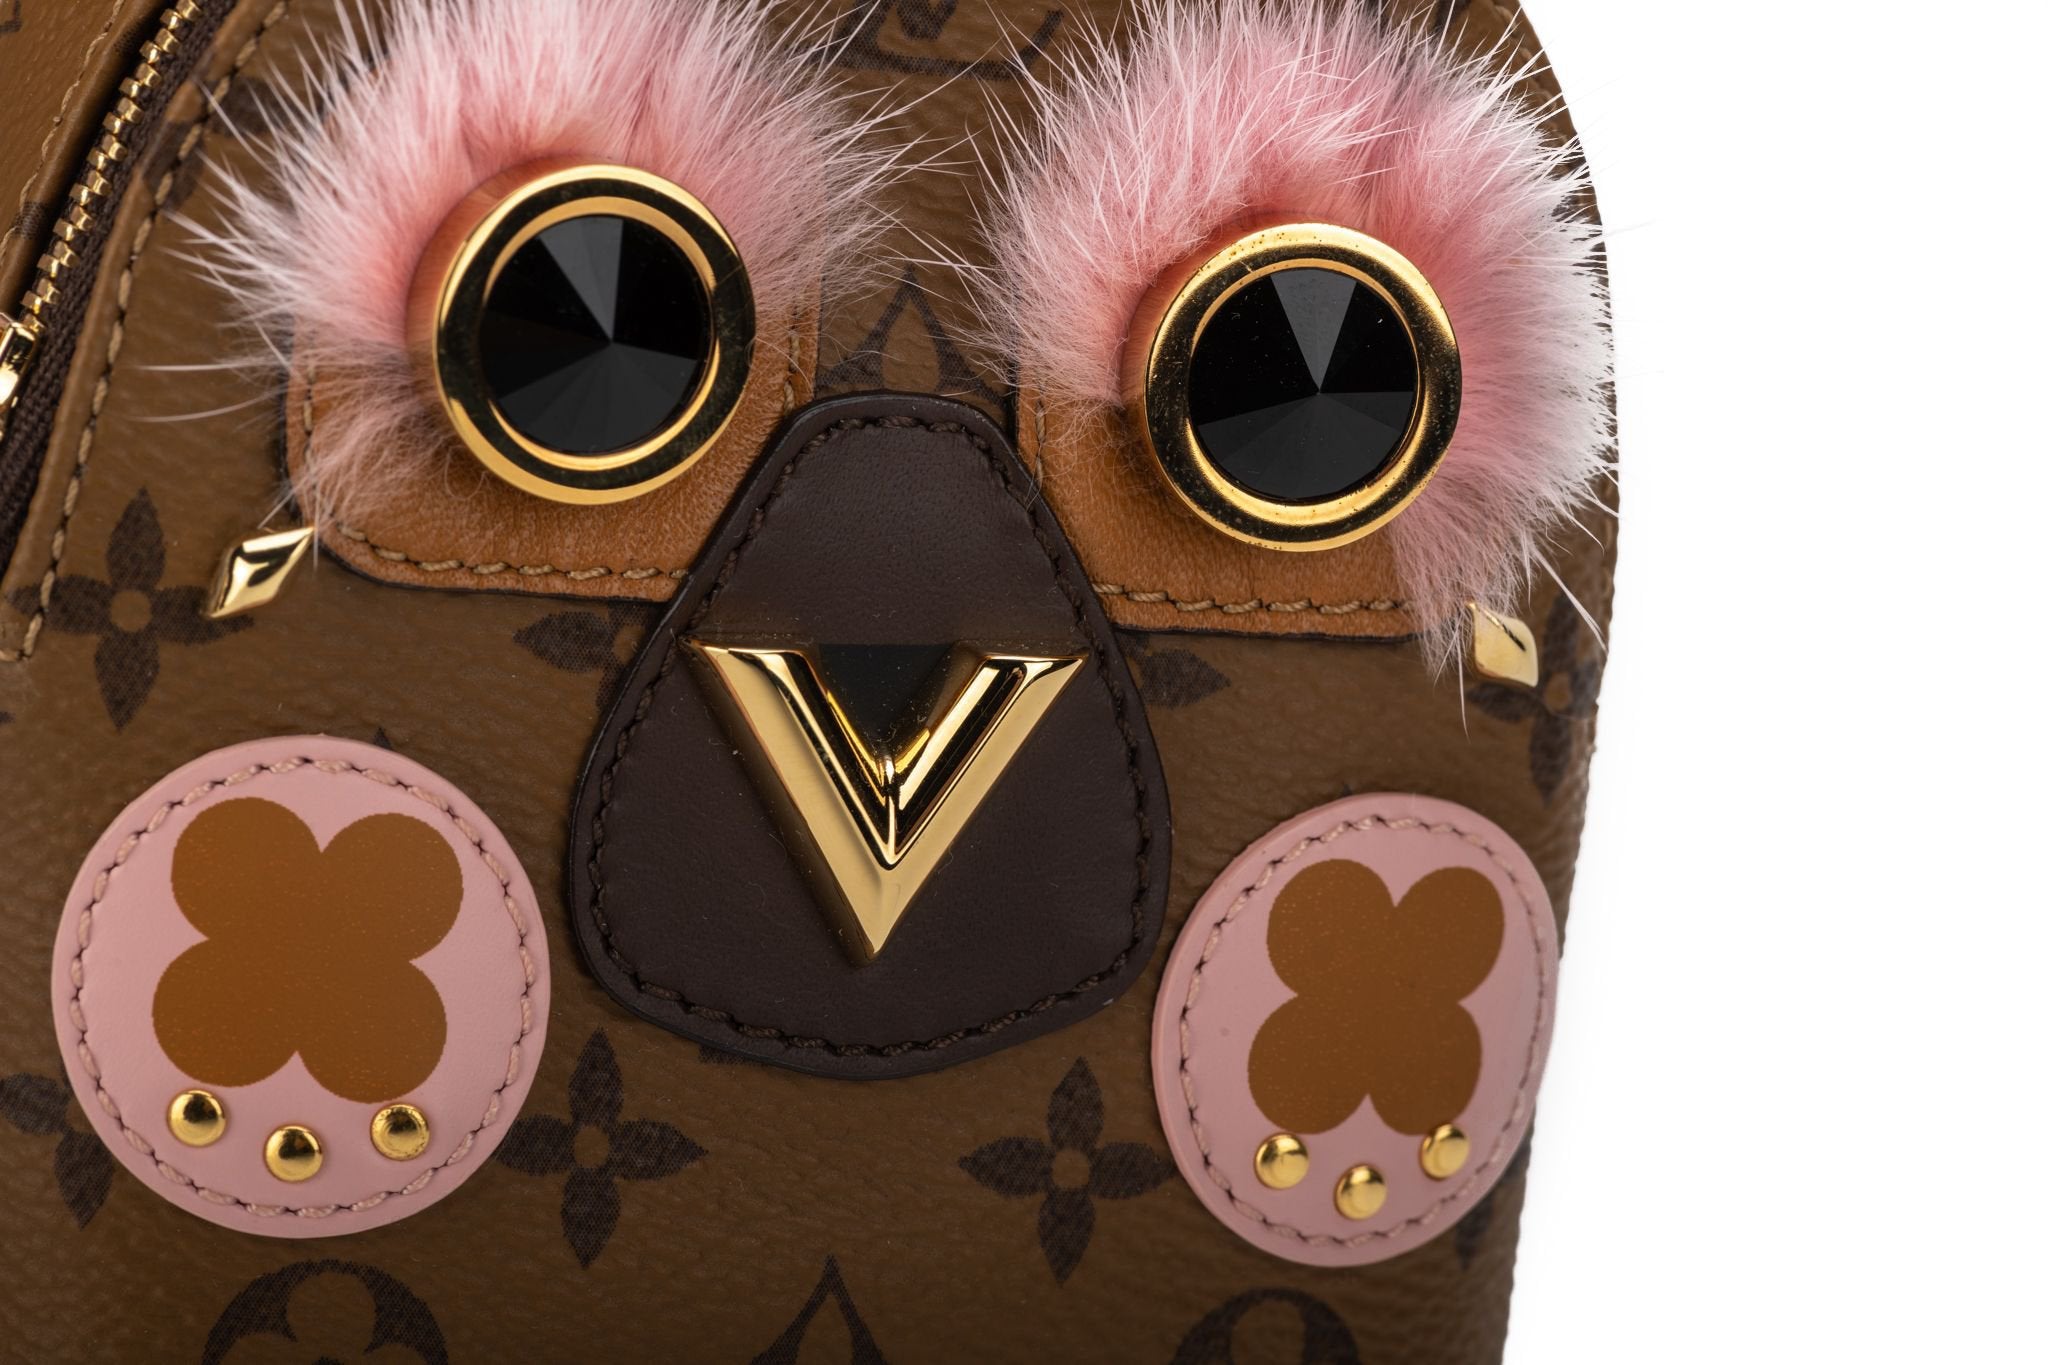 New In Box Rare Louis Vuitton Mini Owl Backpack Charm